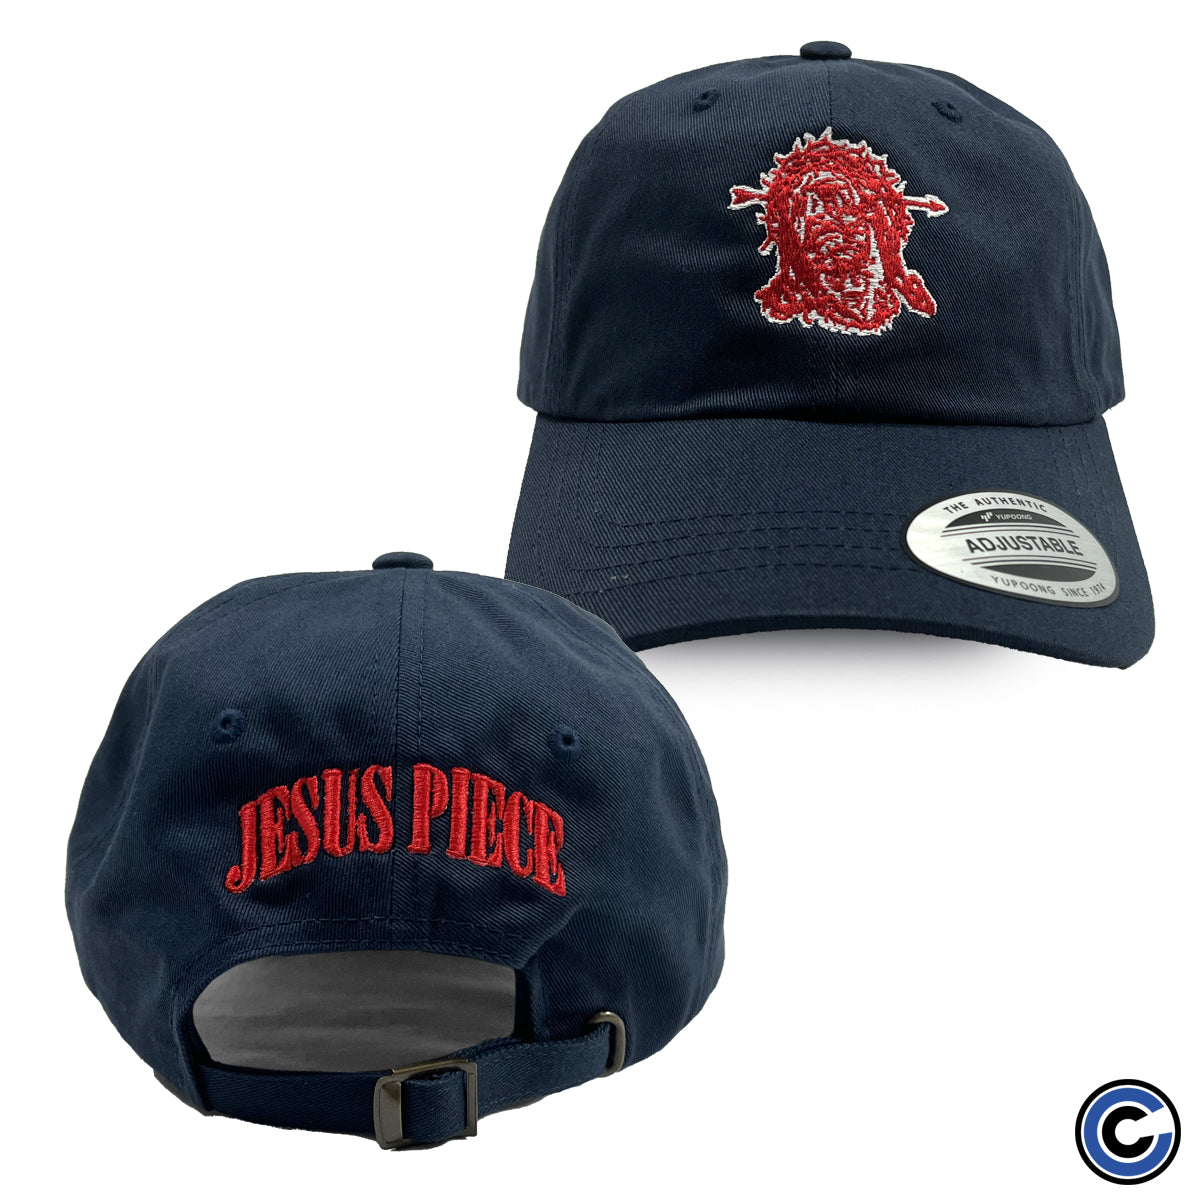 Jesus Piece "Jesus Classic" Navy Hat